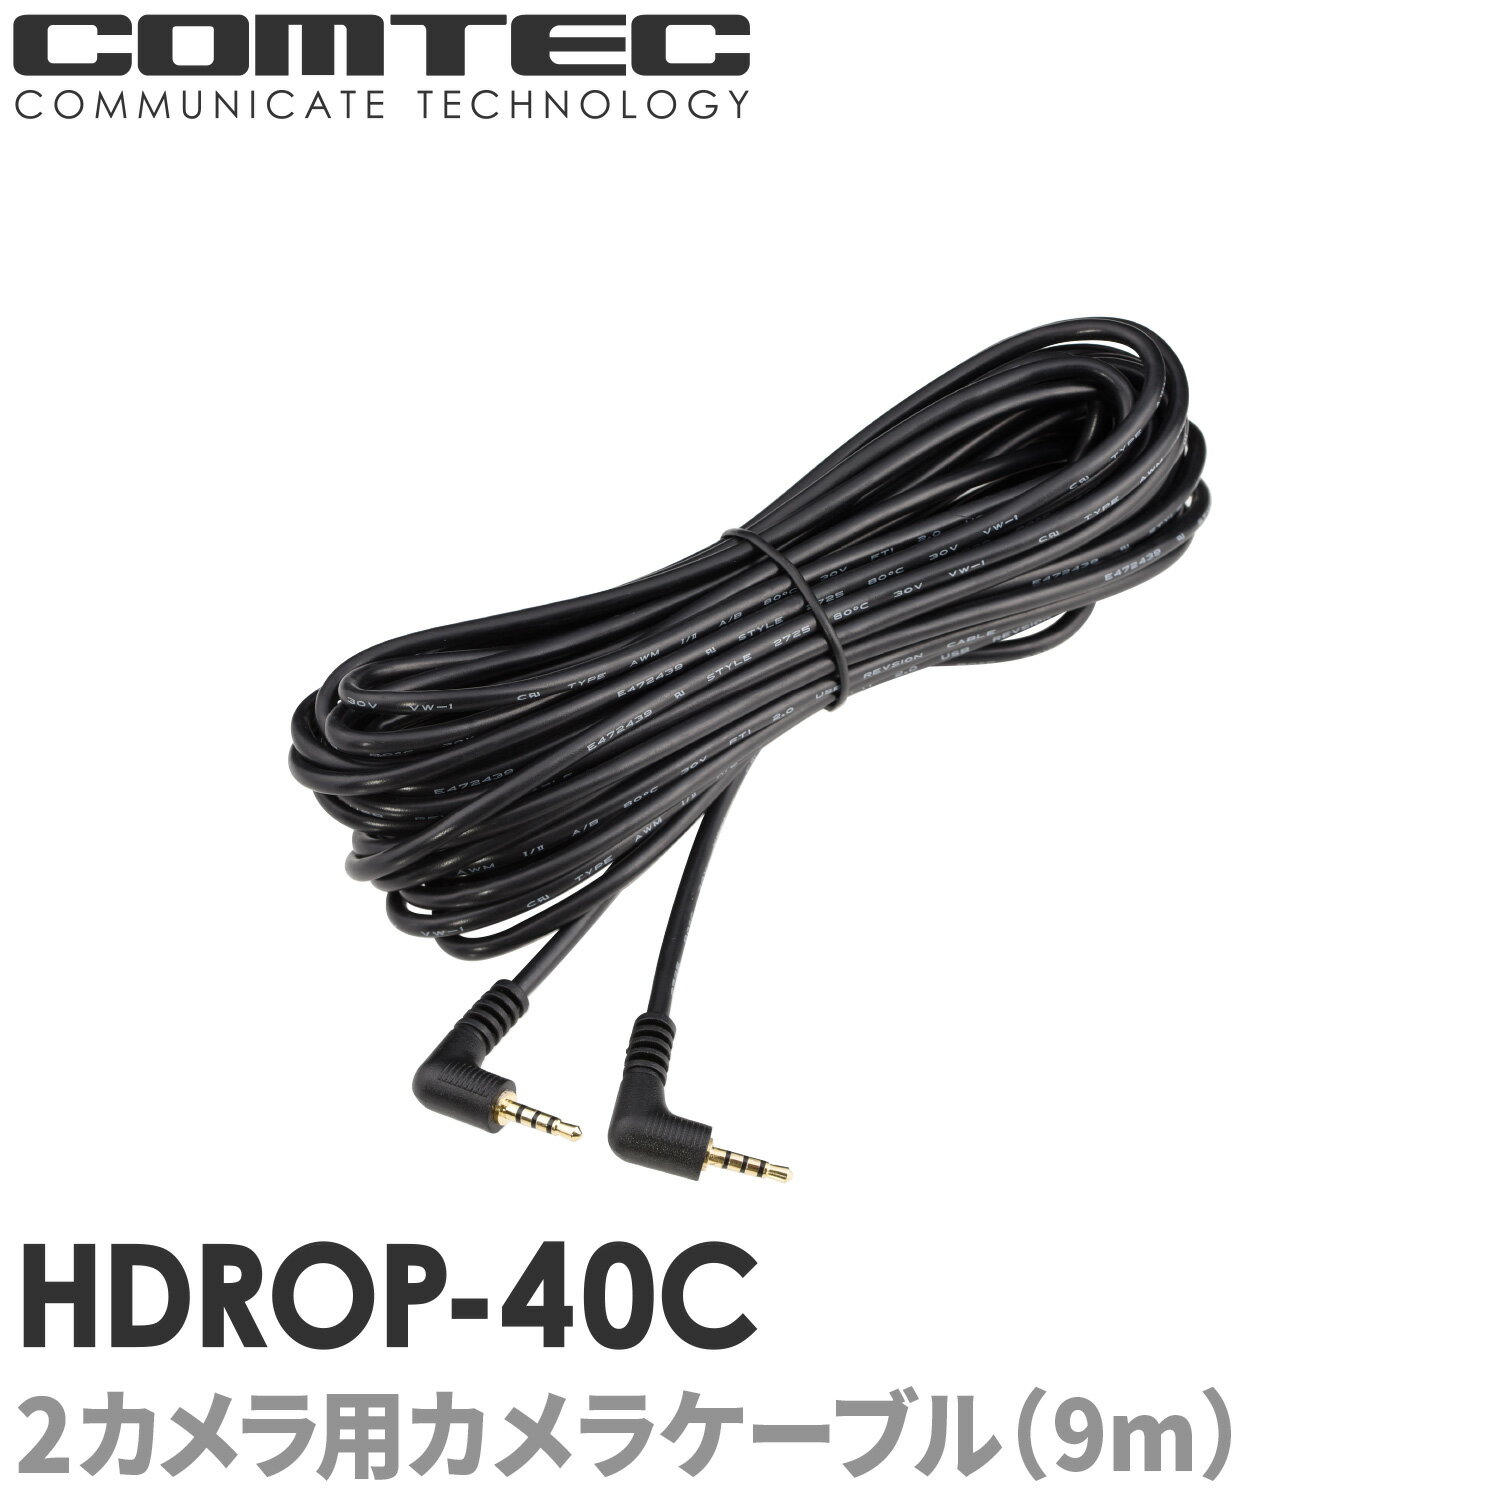 HDROP-40C 2カメラ用カメラケーブル(9m) HDR965GW HDR963GW HDR361GW HDR360GW HDR360GS